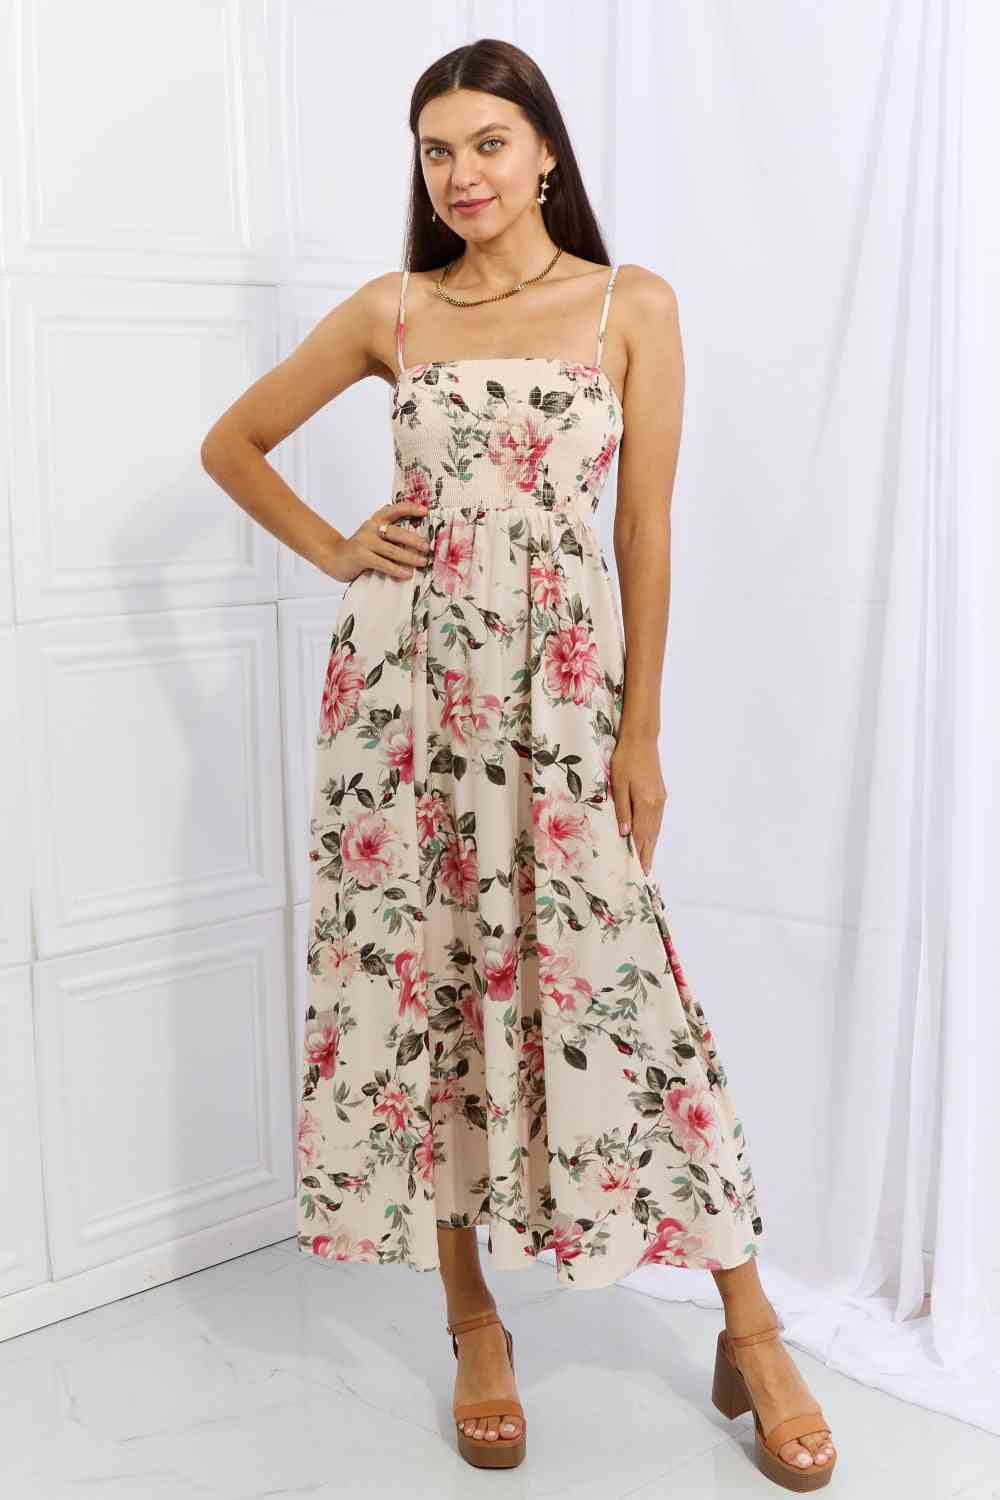 Floral Maxi Dress - Pink - Dress - Mod&Soul - MOD&SOUL